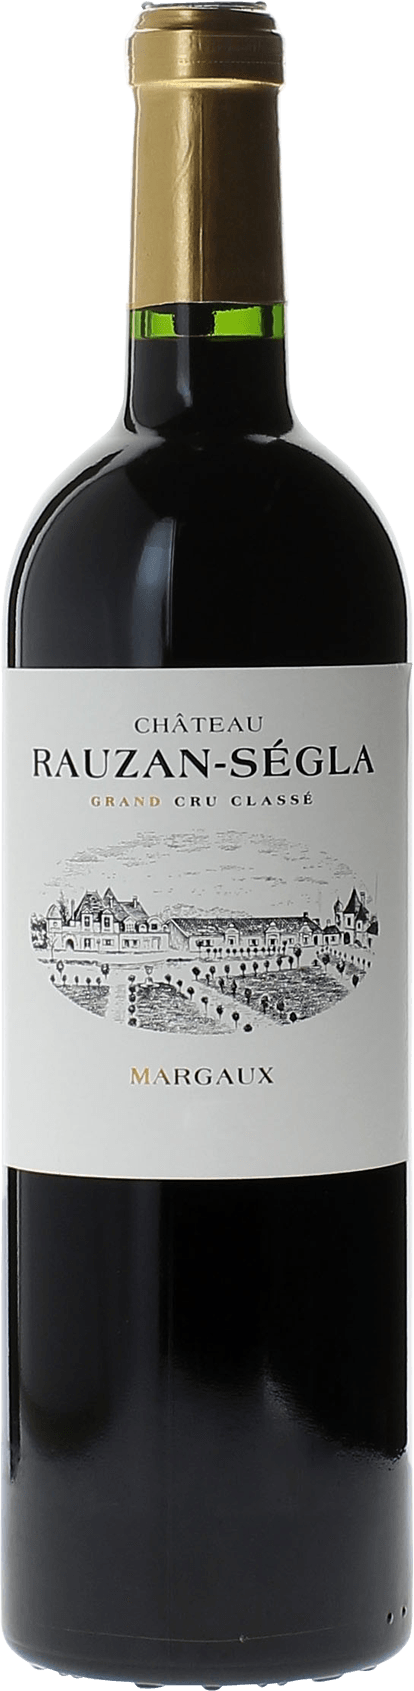 Rauzan-segla 1994 2me Grand cru class Margaux, Bordeaux rouge